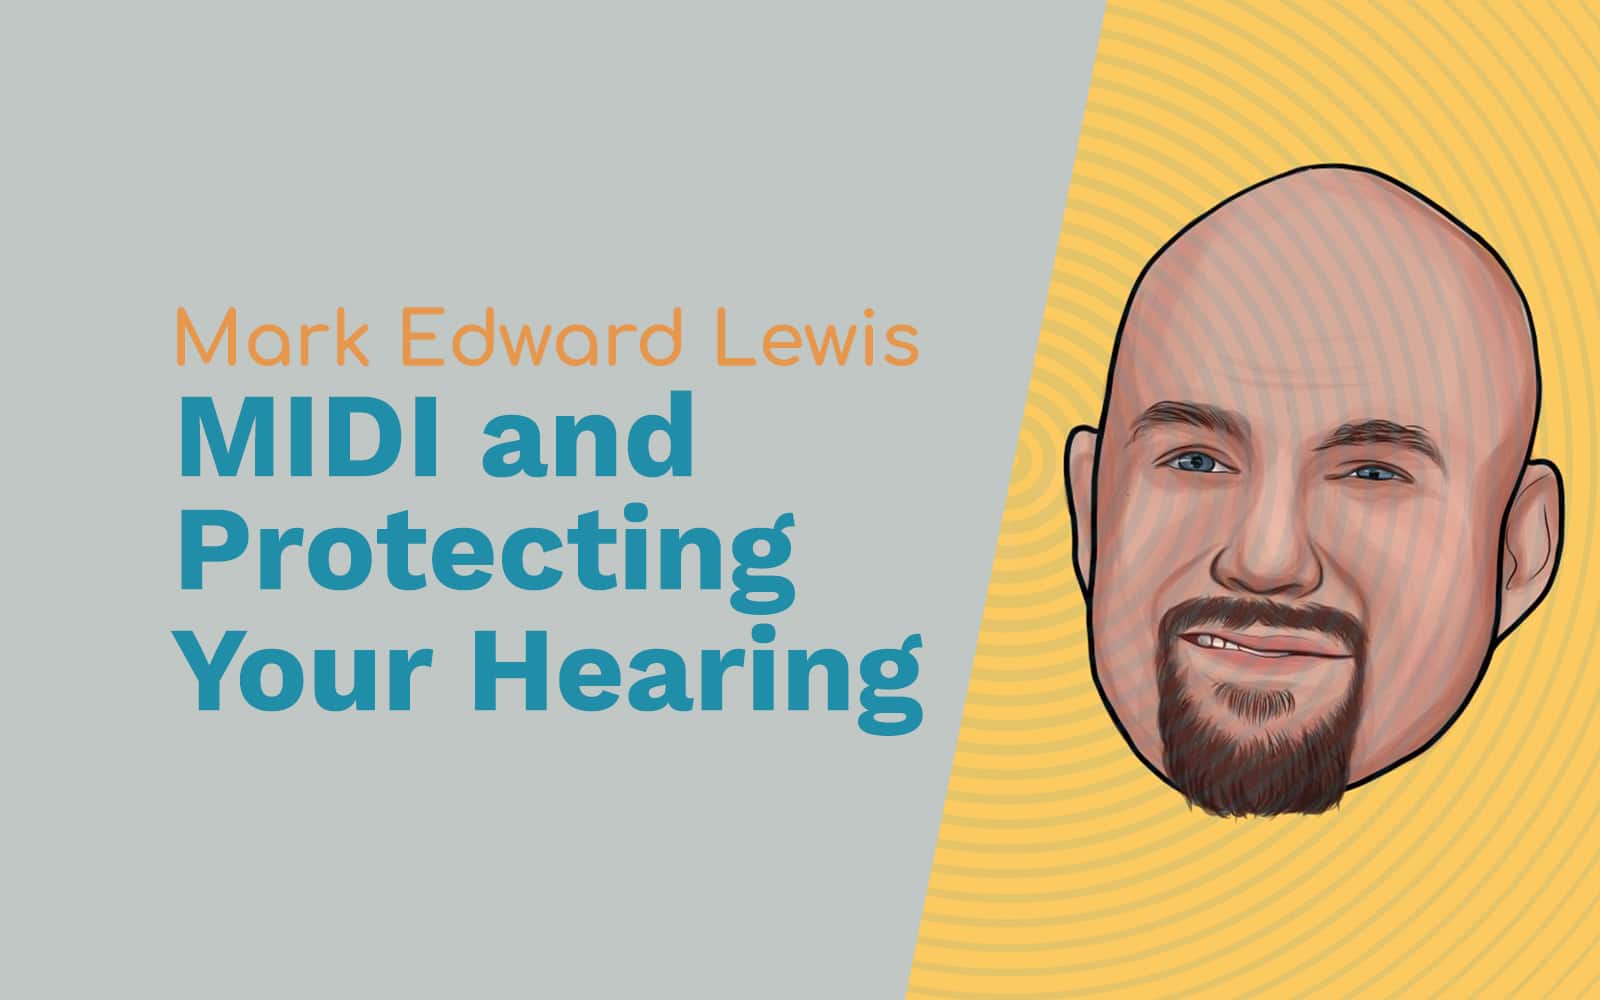 Mark Edward Lewis: Cinema Sound, MIDI and Protecting Your Hearing Adobe Audition Podcast  Music Radio Creative